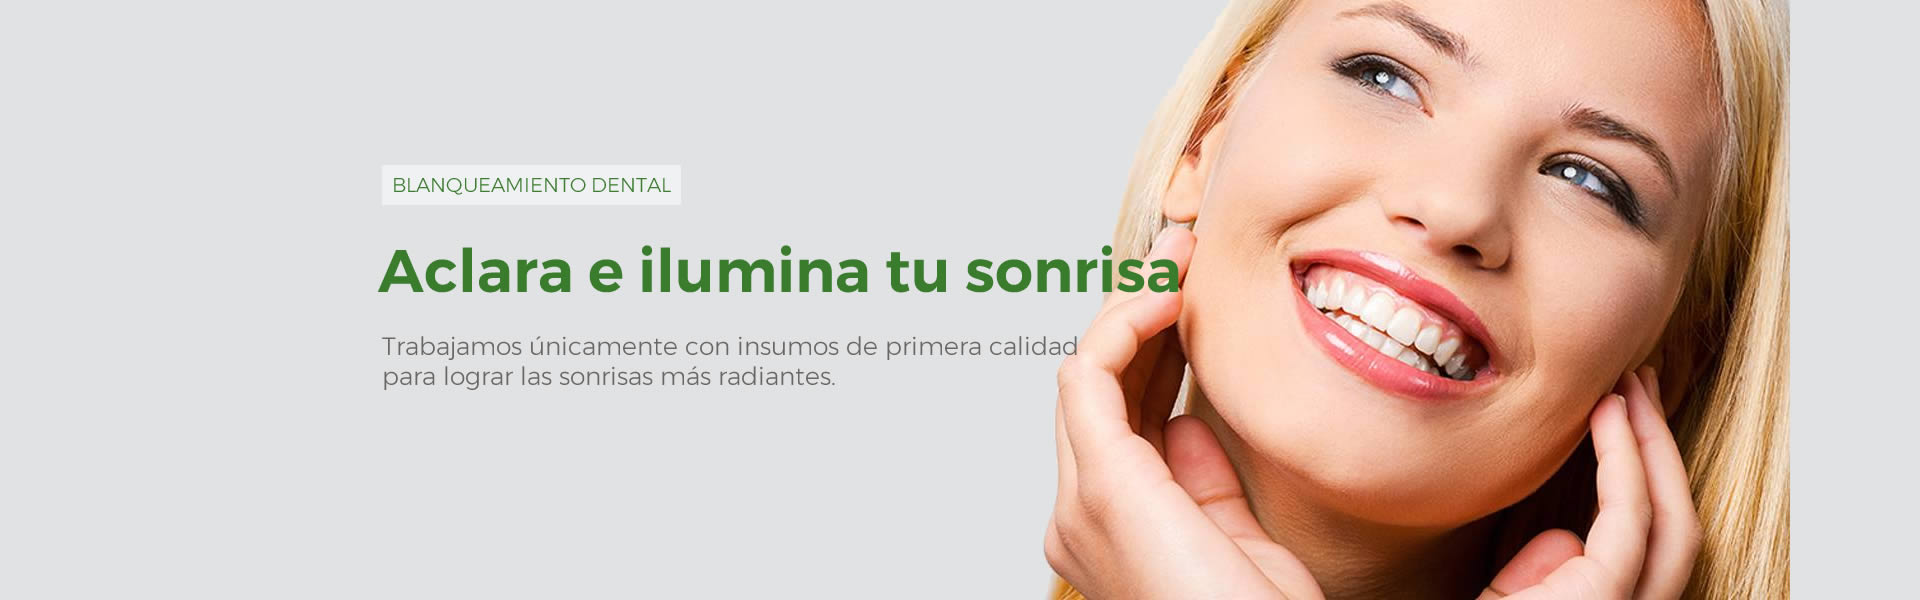 blanqueamiento-dental-drablois-Buenos-Aires-clinica-dental